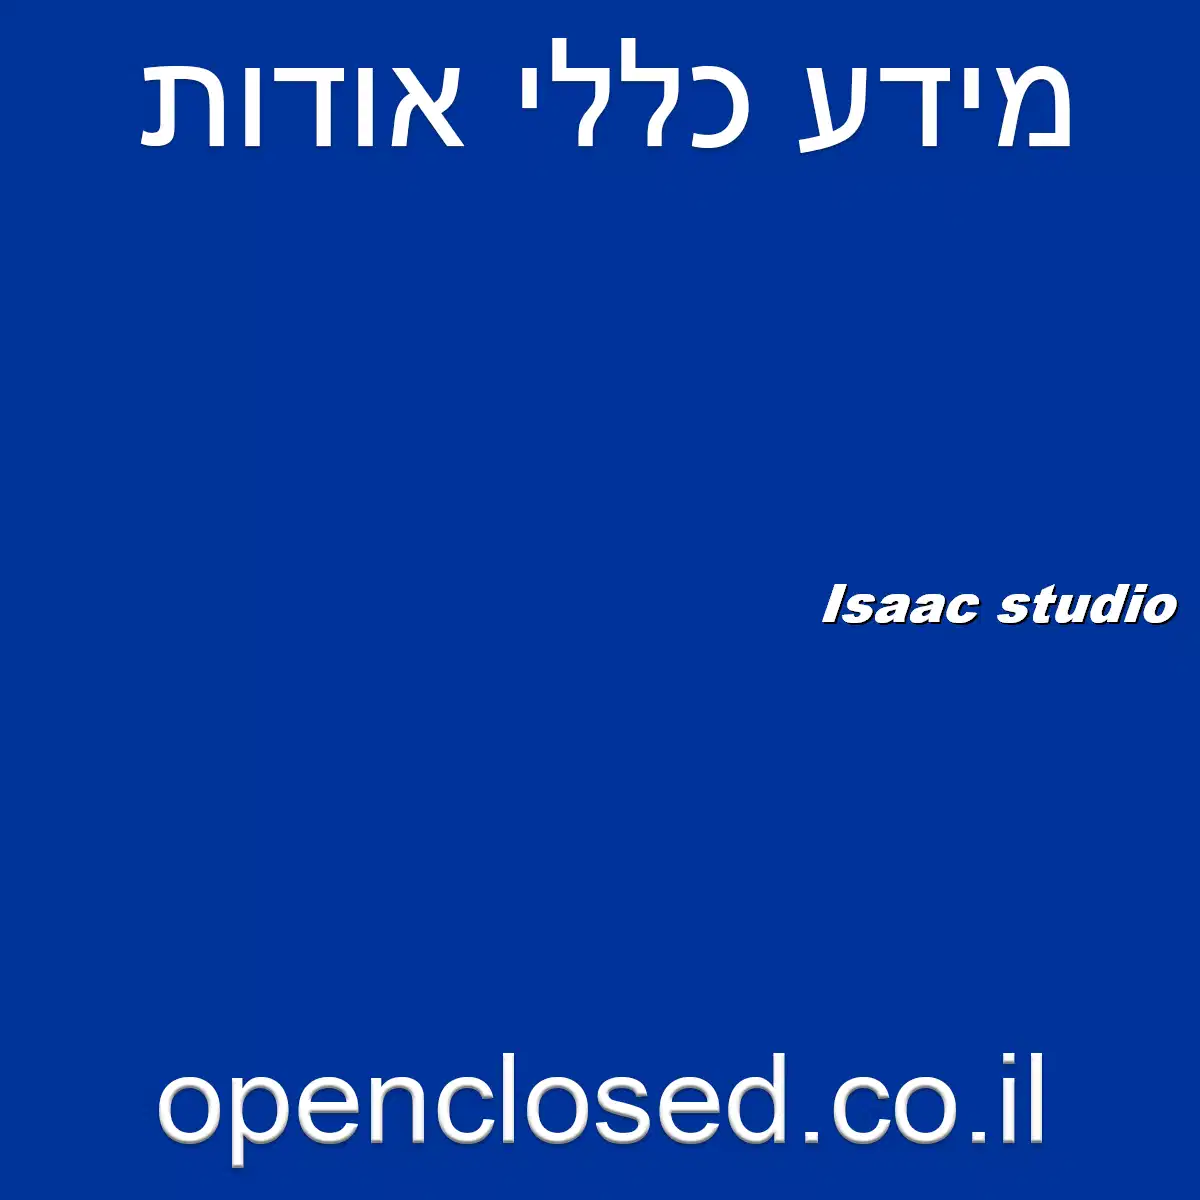 Isaac studio